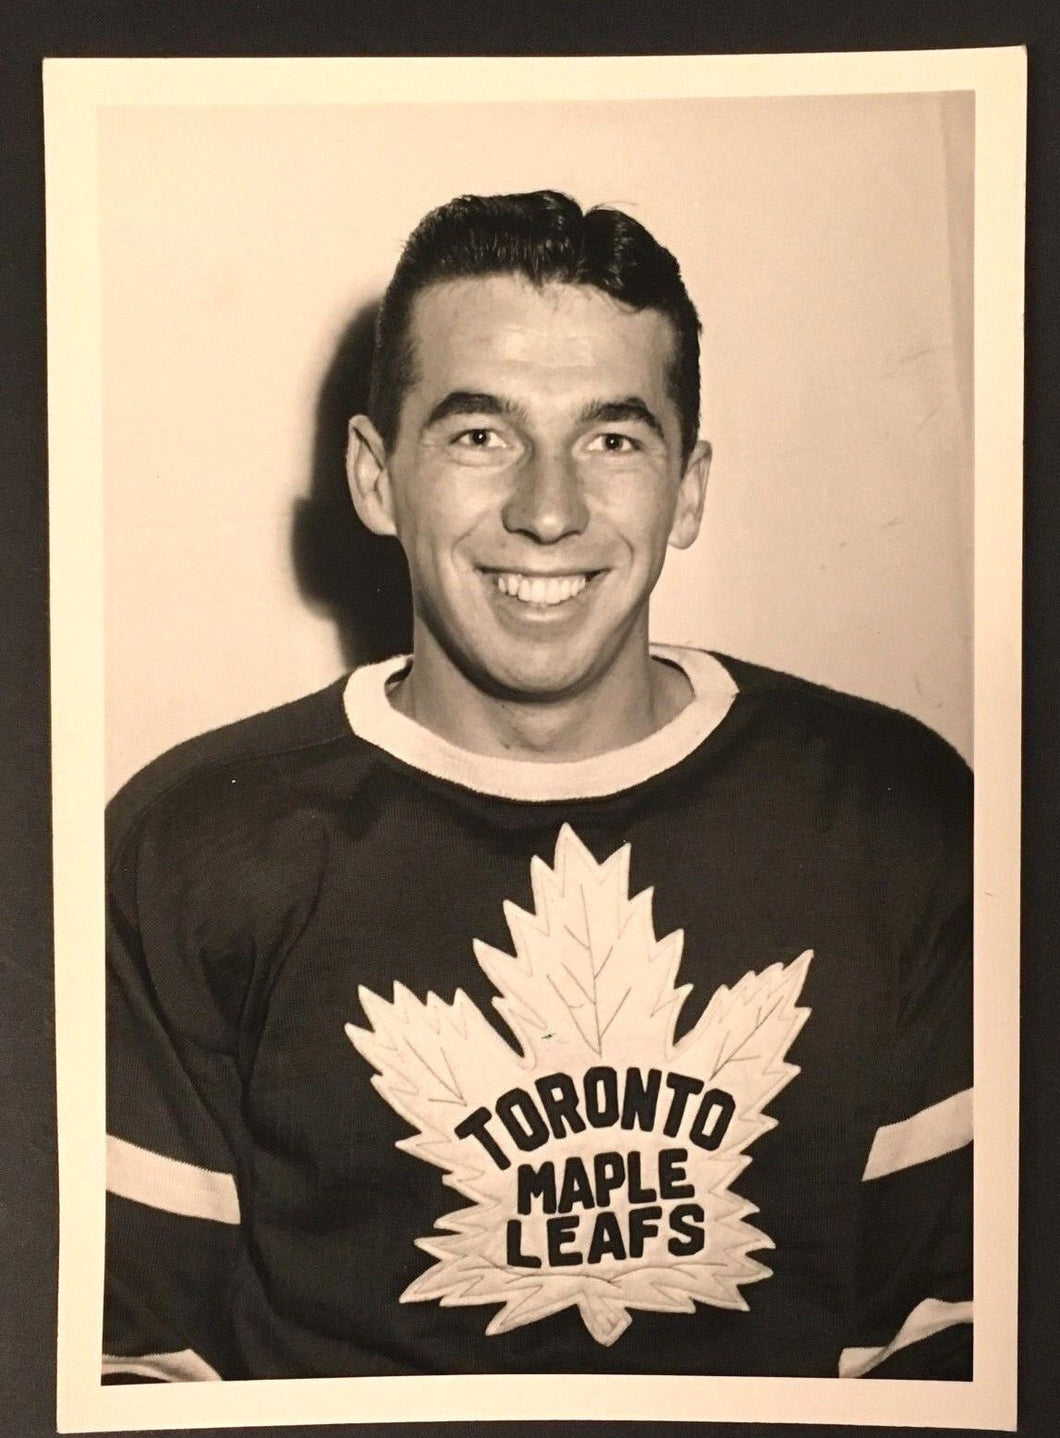 1958 Toronto Maple Leafs Ron Stewart Turofsky Photo Vintage Hockey NHL